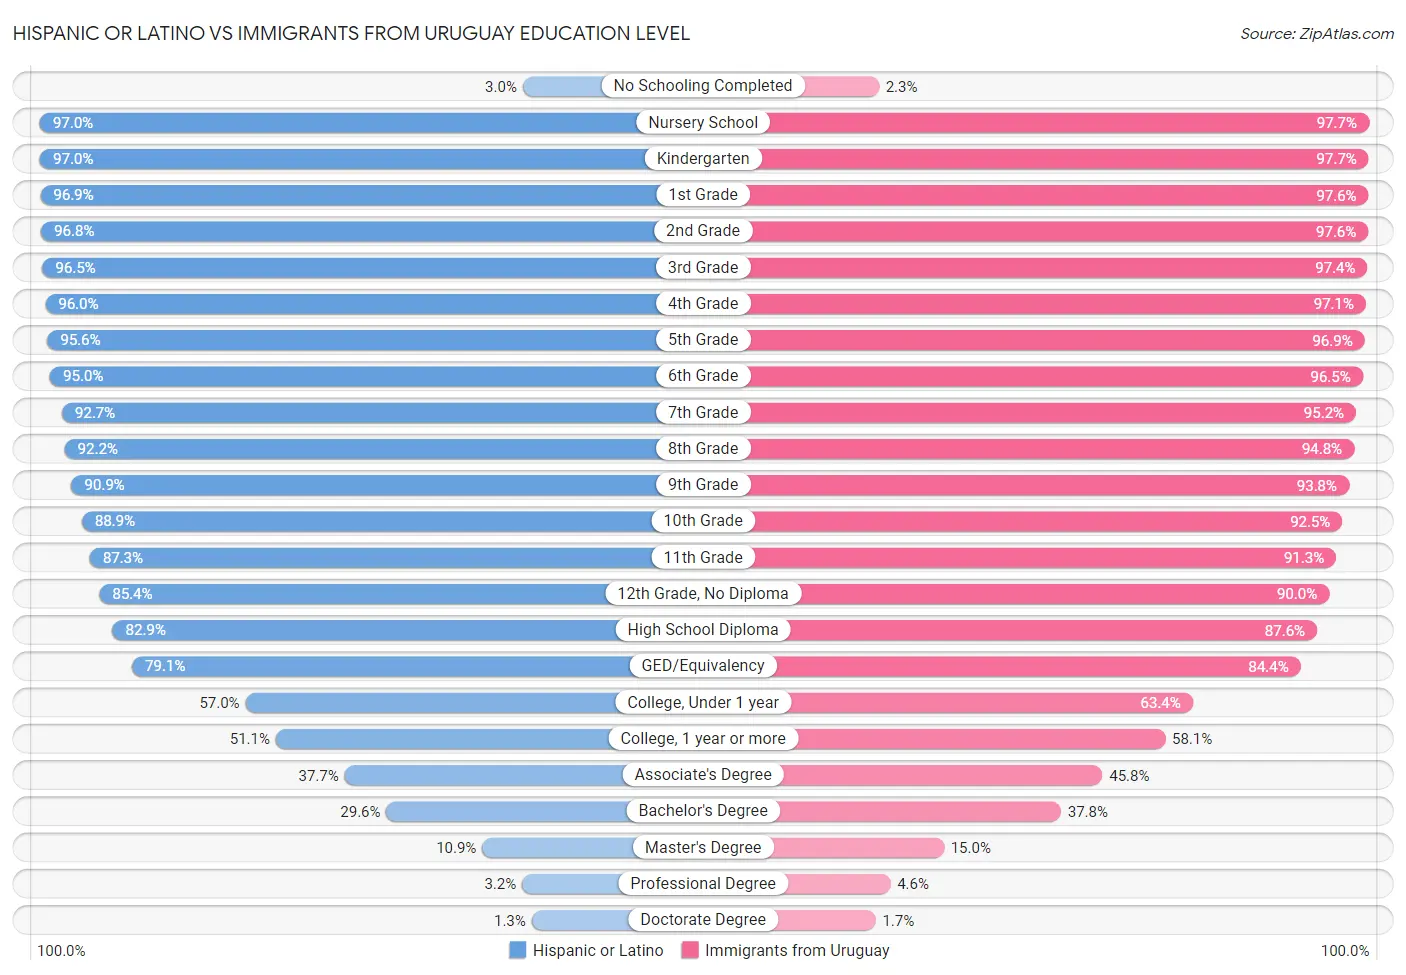 Hispanic or Latino vs Immigrants from Uruguay Education Level